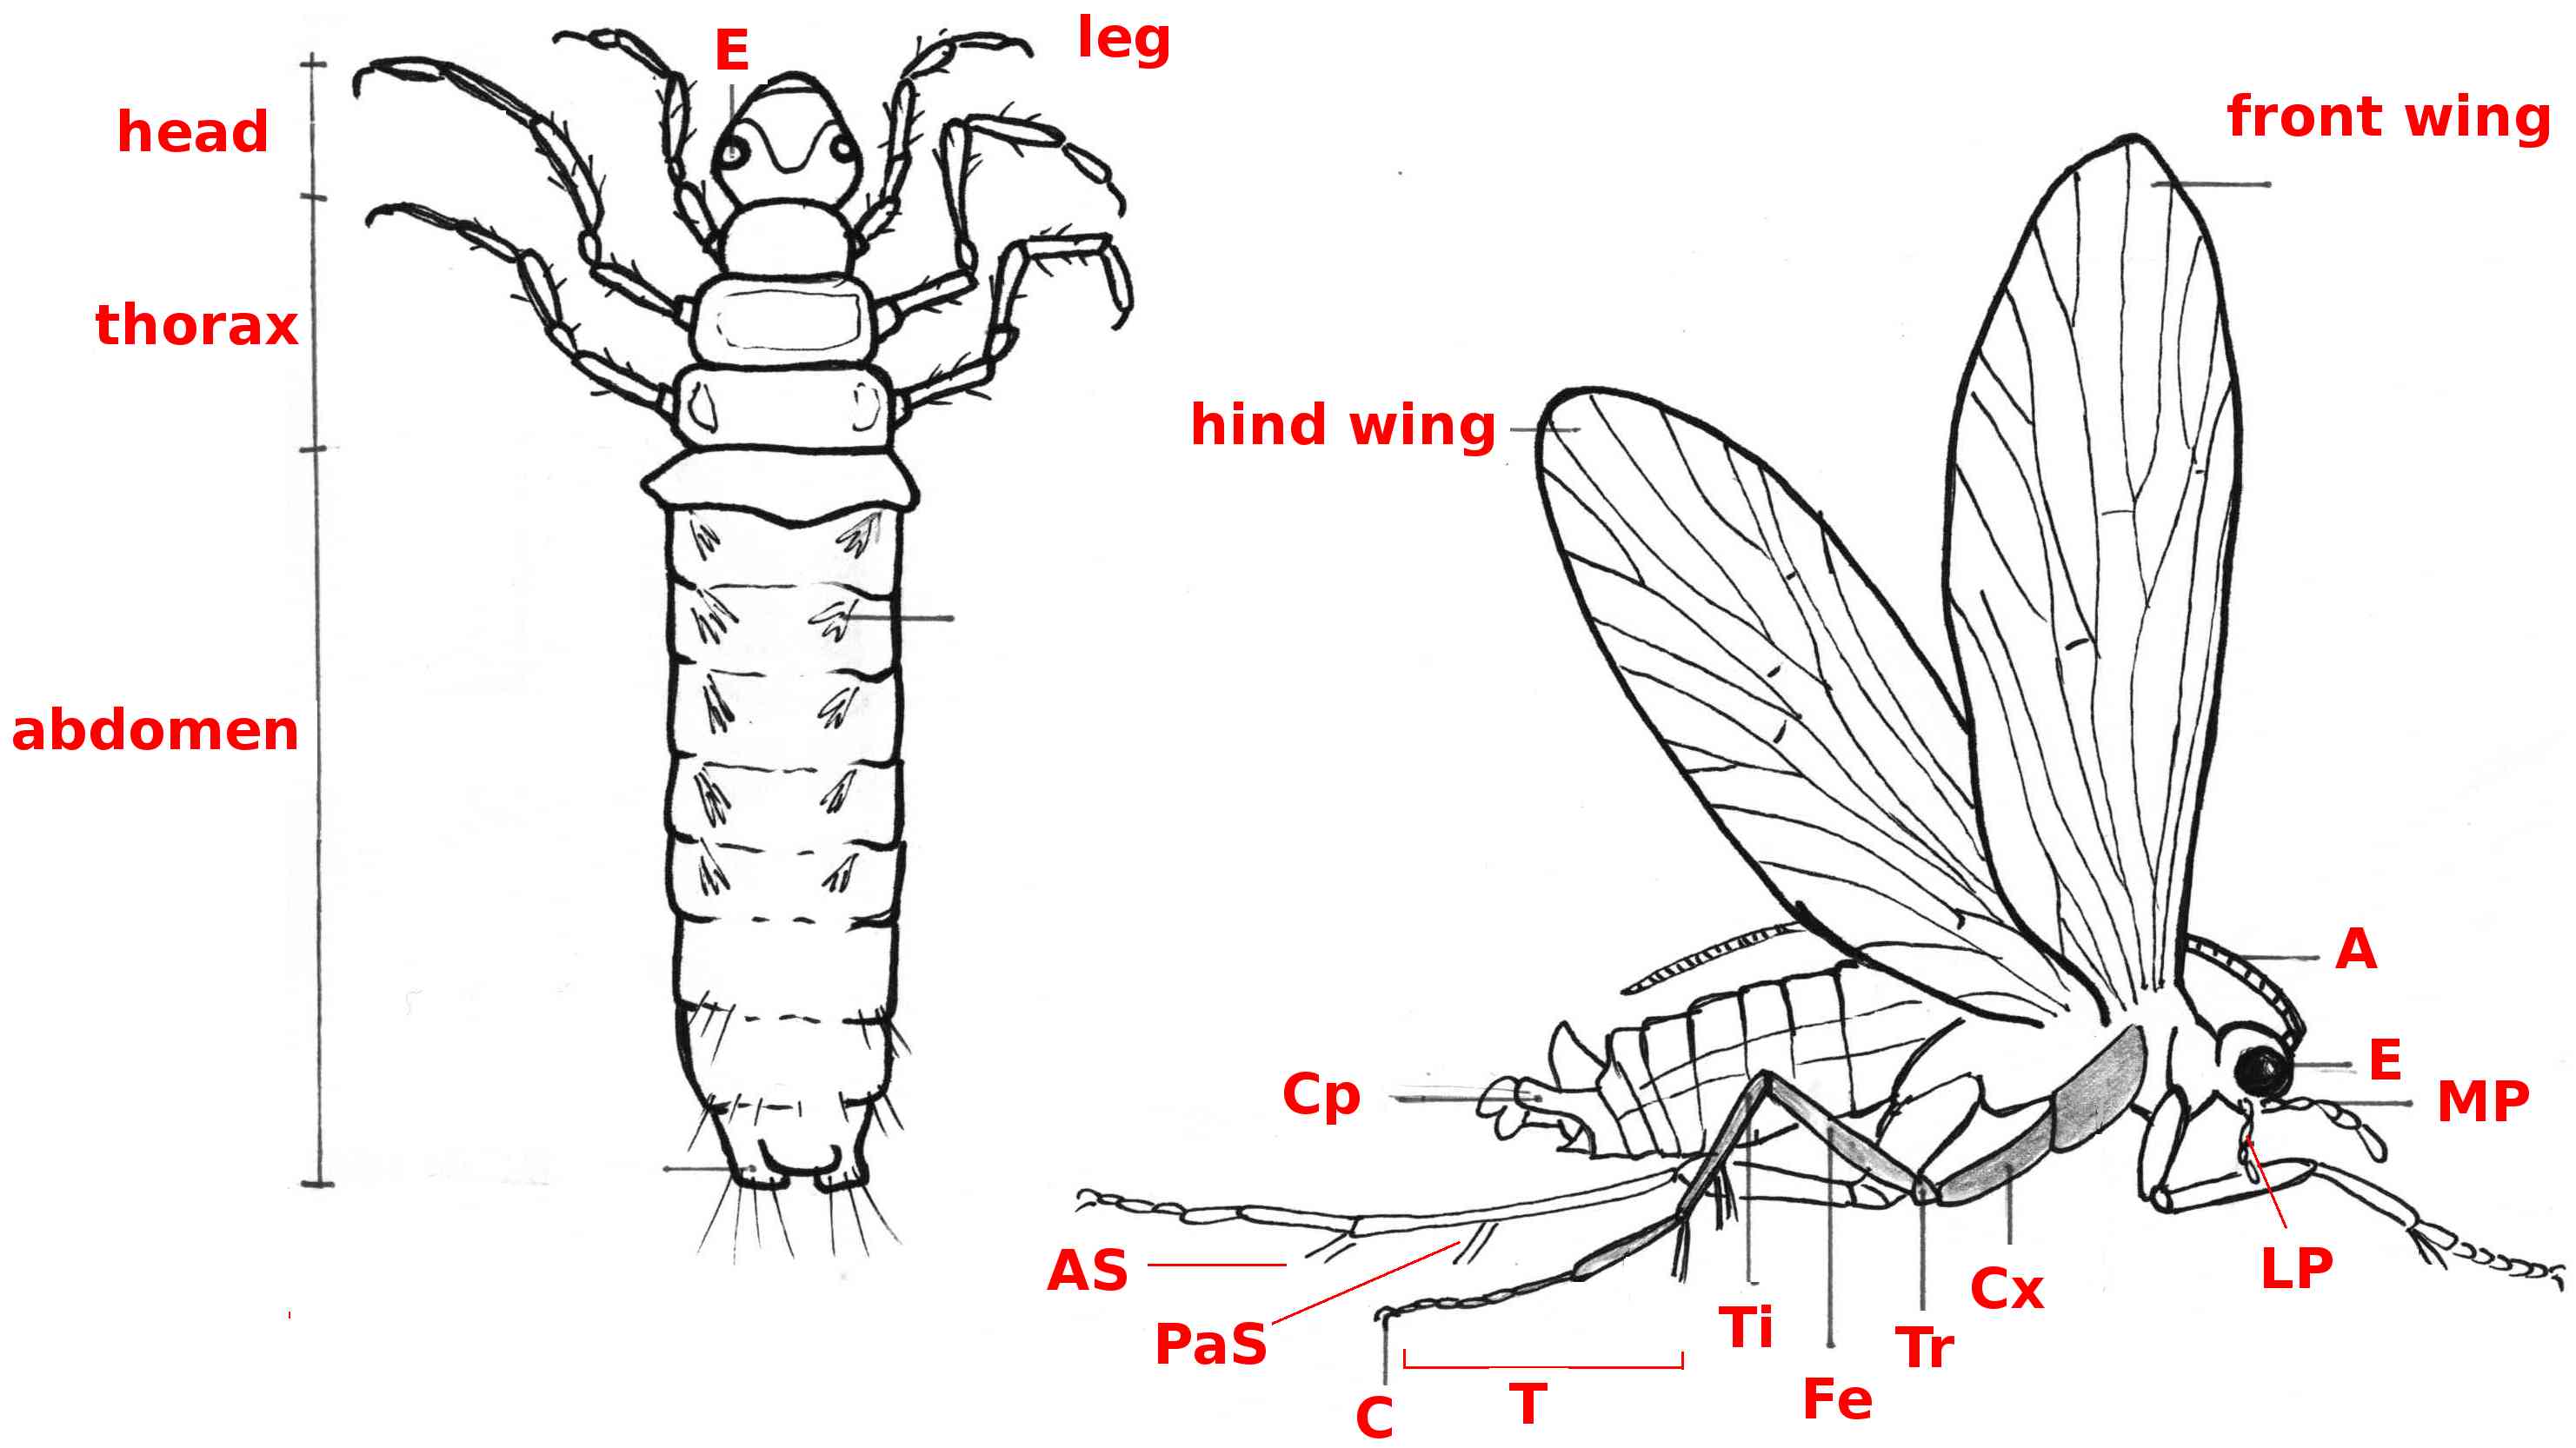 02 trichoptera adultlarva b44